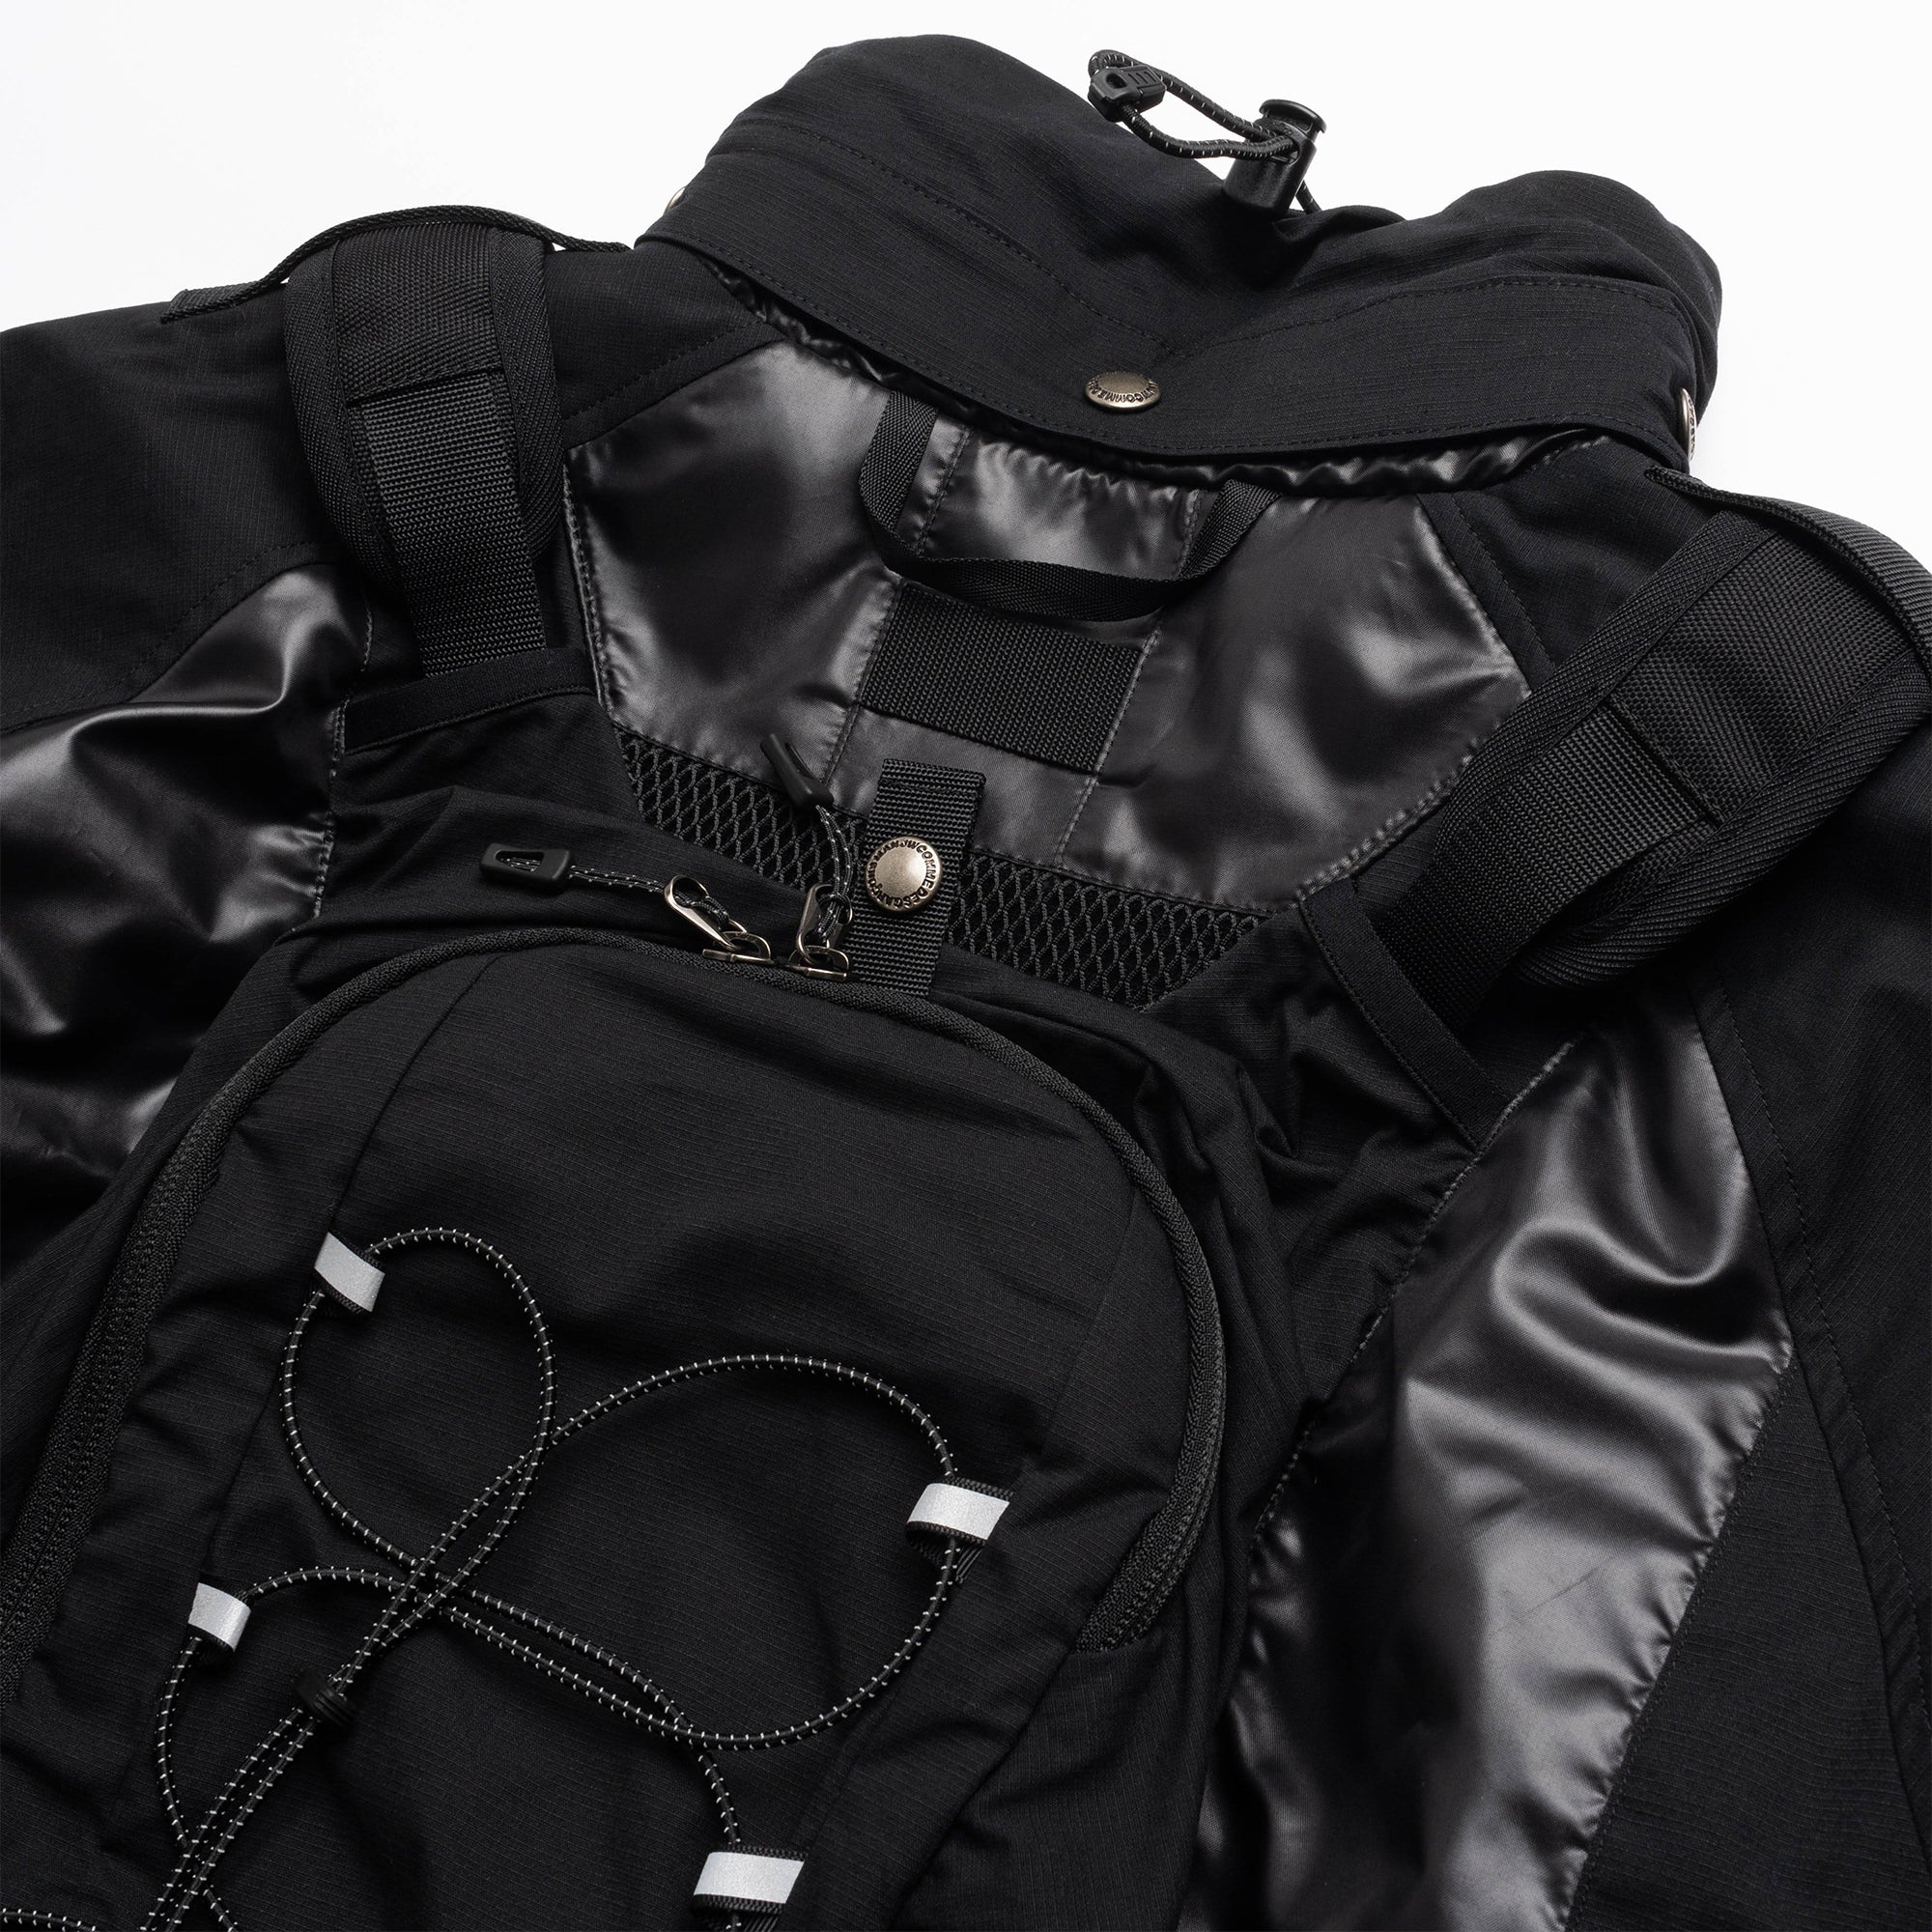 Kalligraphy motif hoodie Utility Backpack Jacket GMP01134 WL-J014-051-1 Black